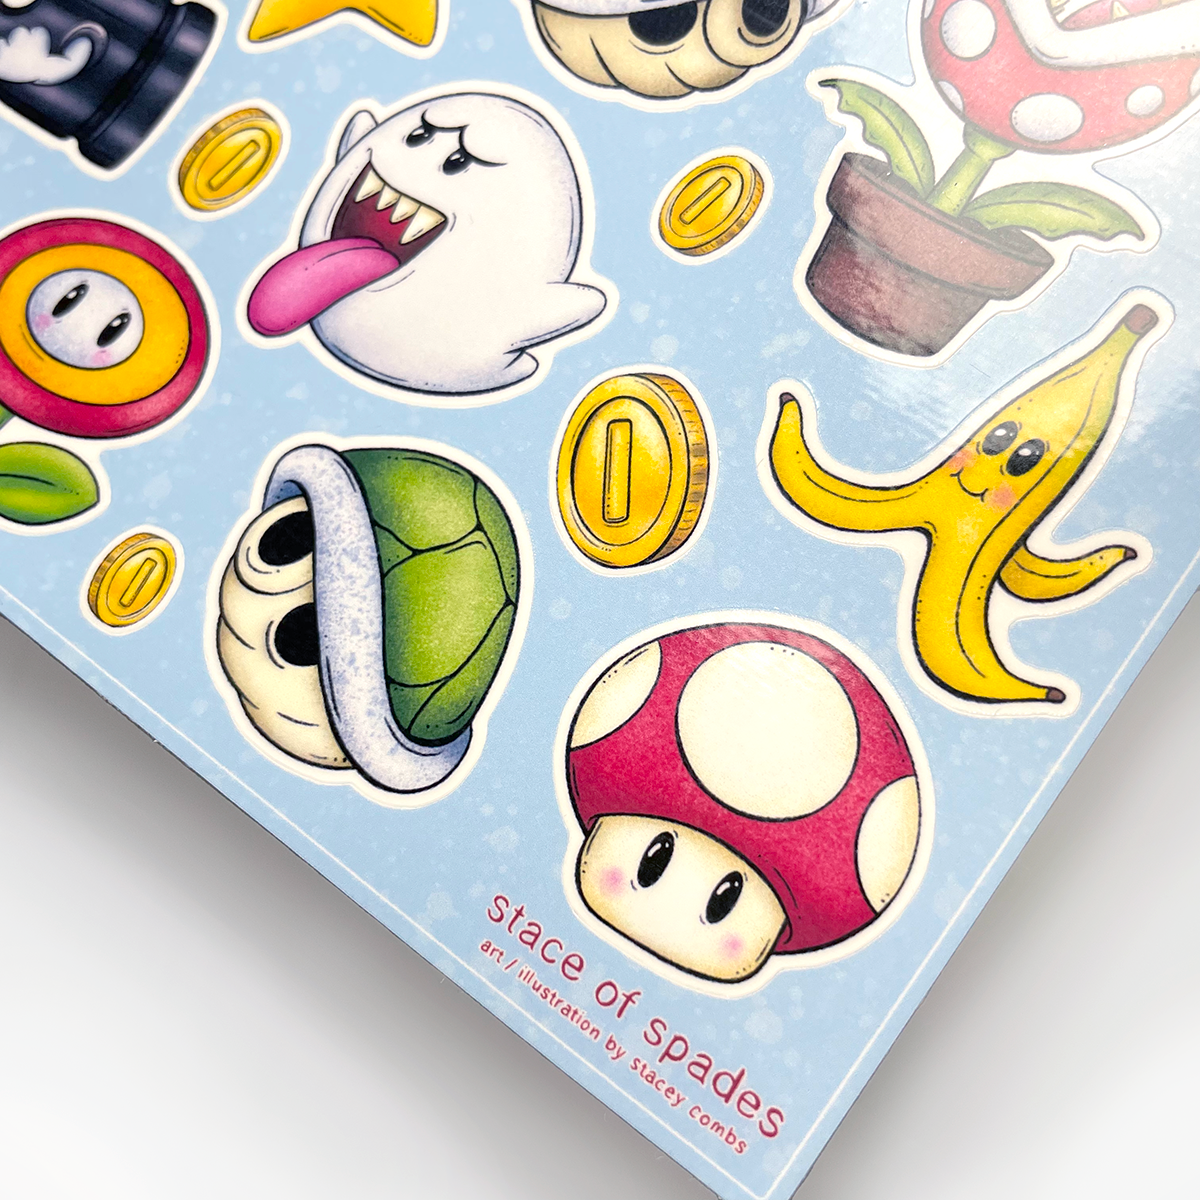 Mario Kart Sticker Sheet